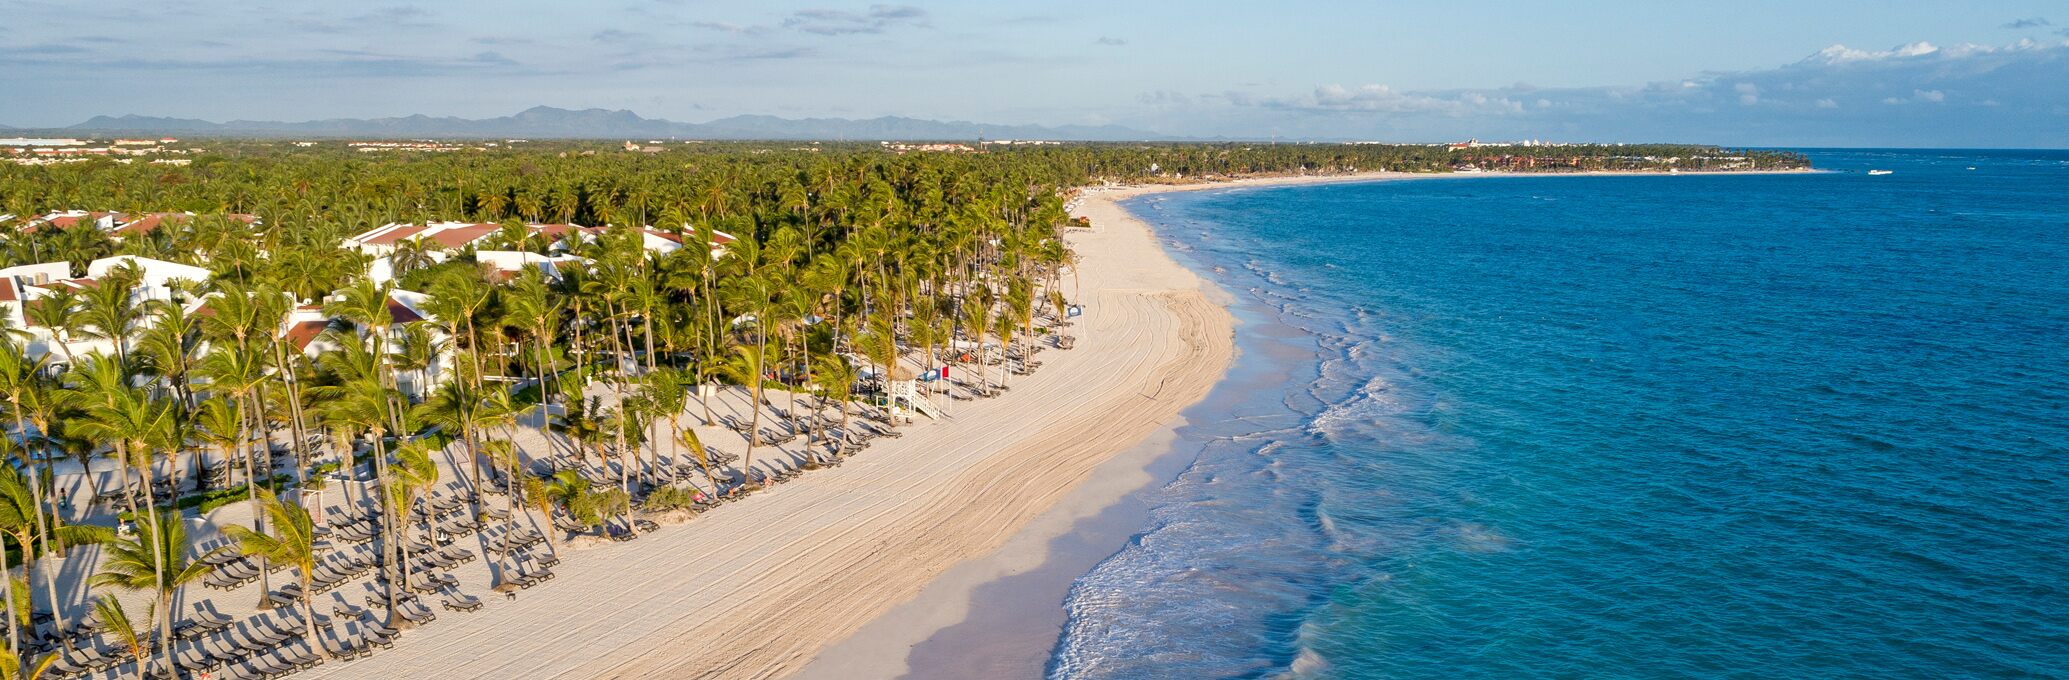 Occidental Punta Cana: mejor hotel Punta Cana